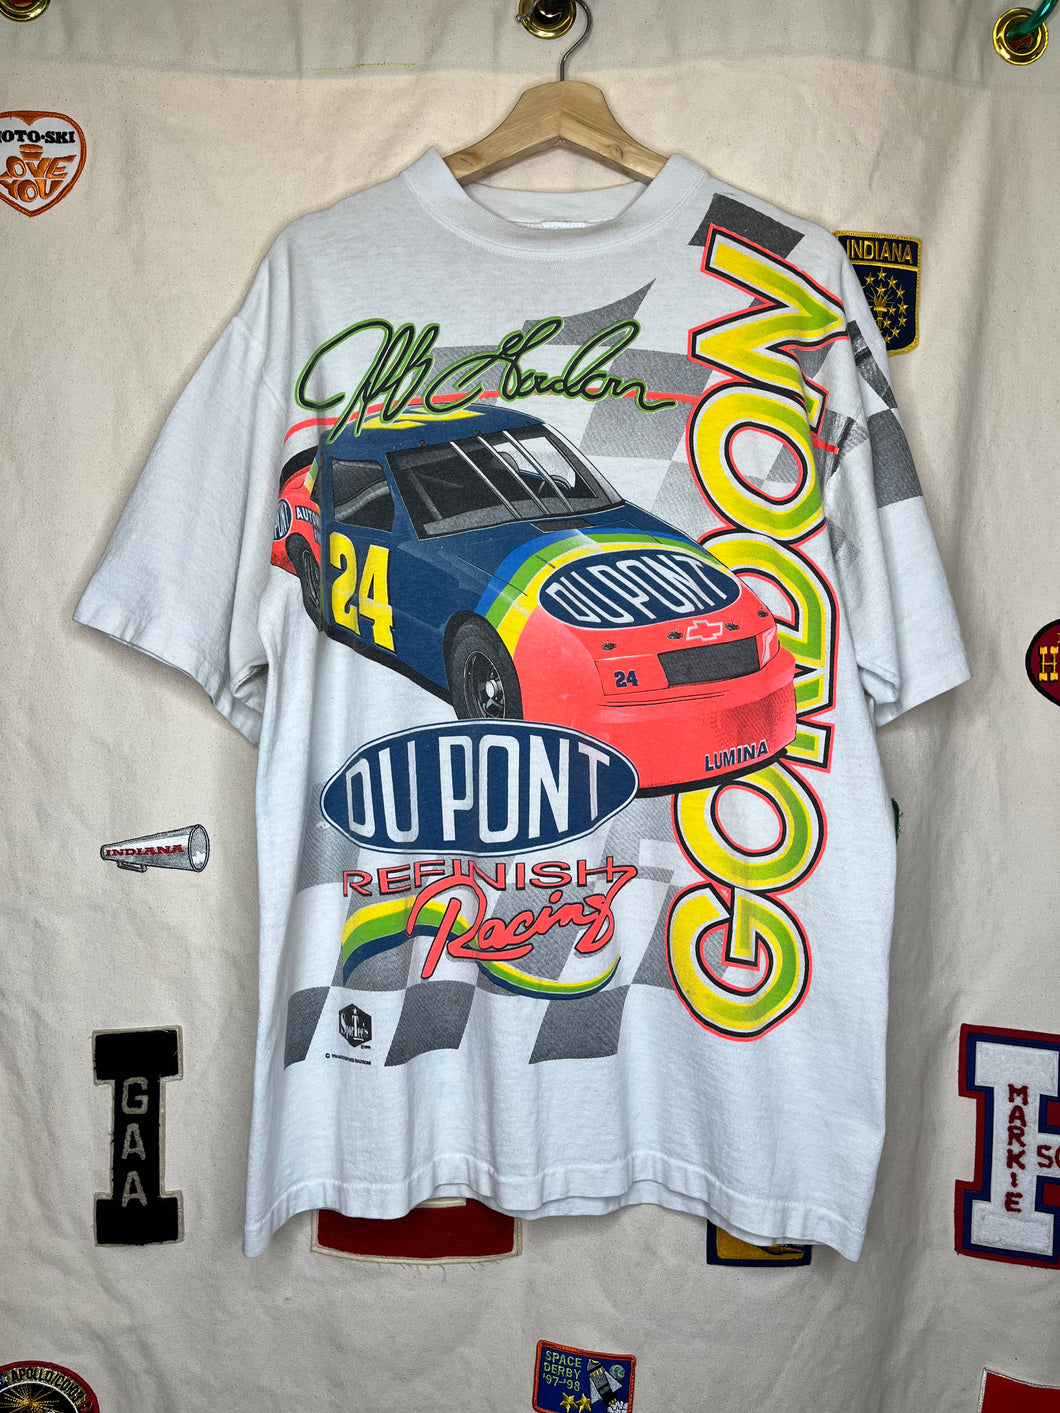 Vintage Jeff Gordon 24 NASCAR All Over Print White T-Shirt: Large